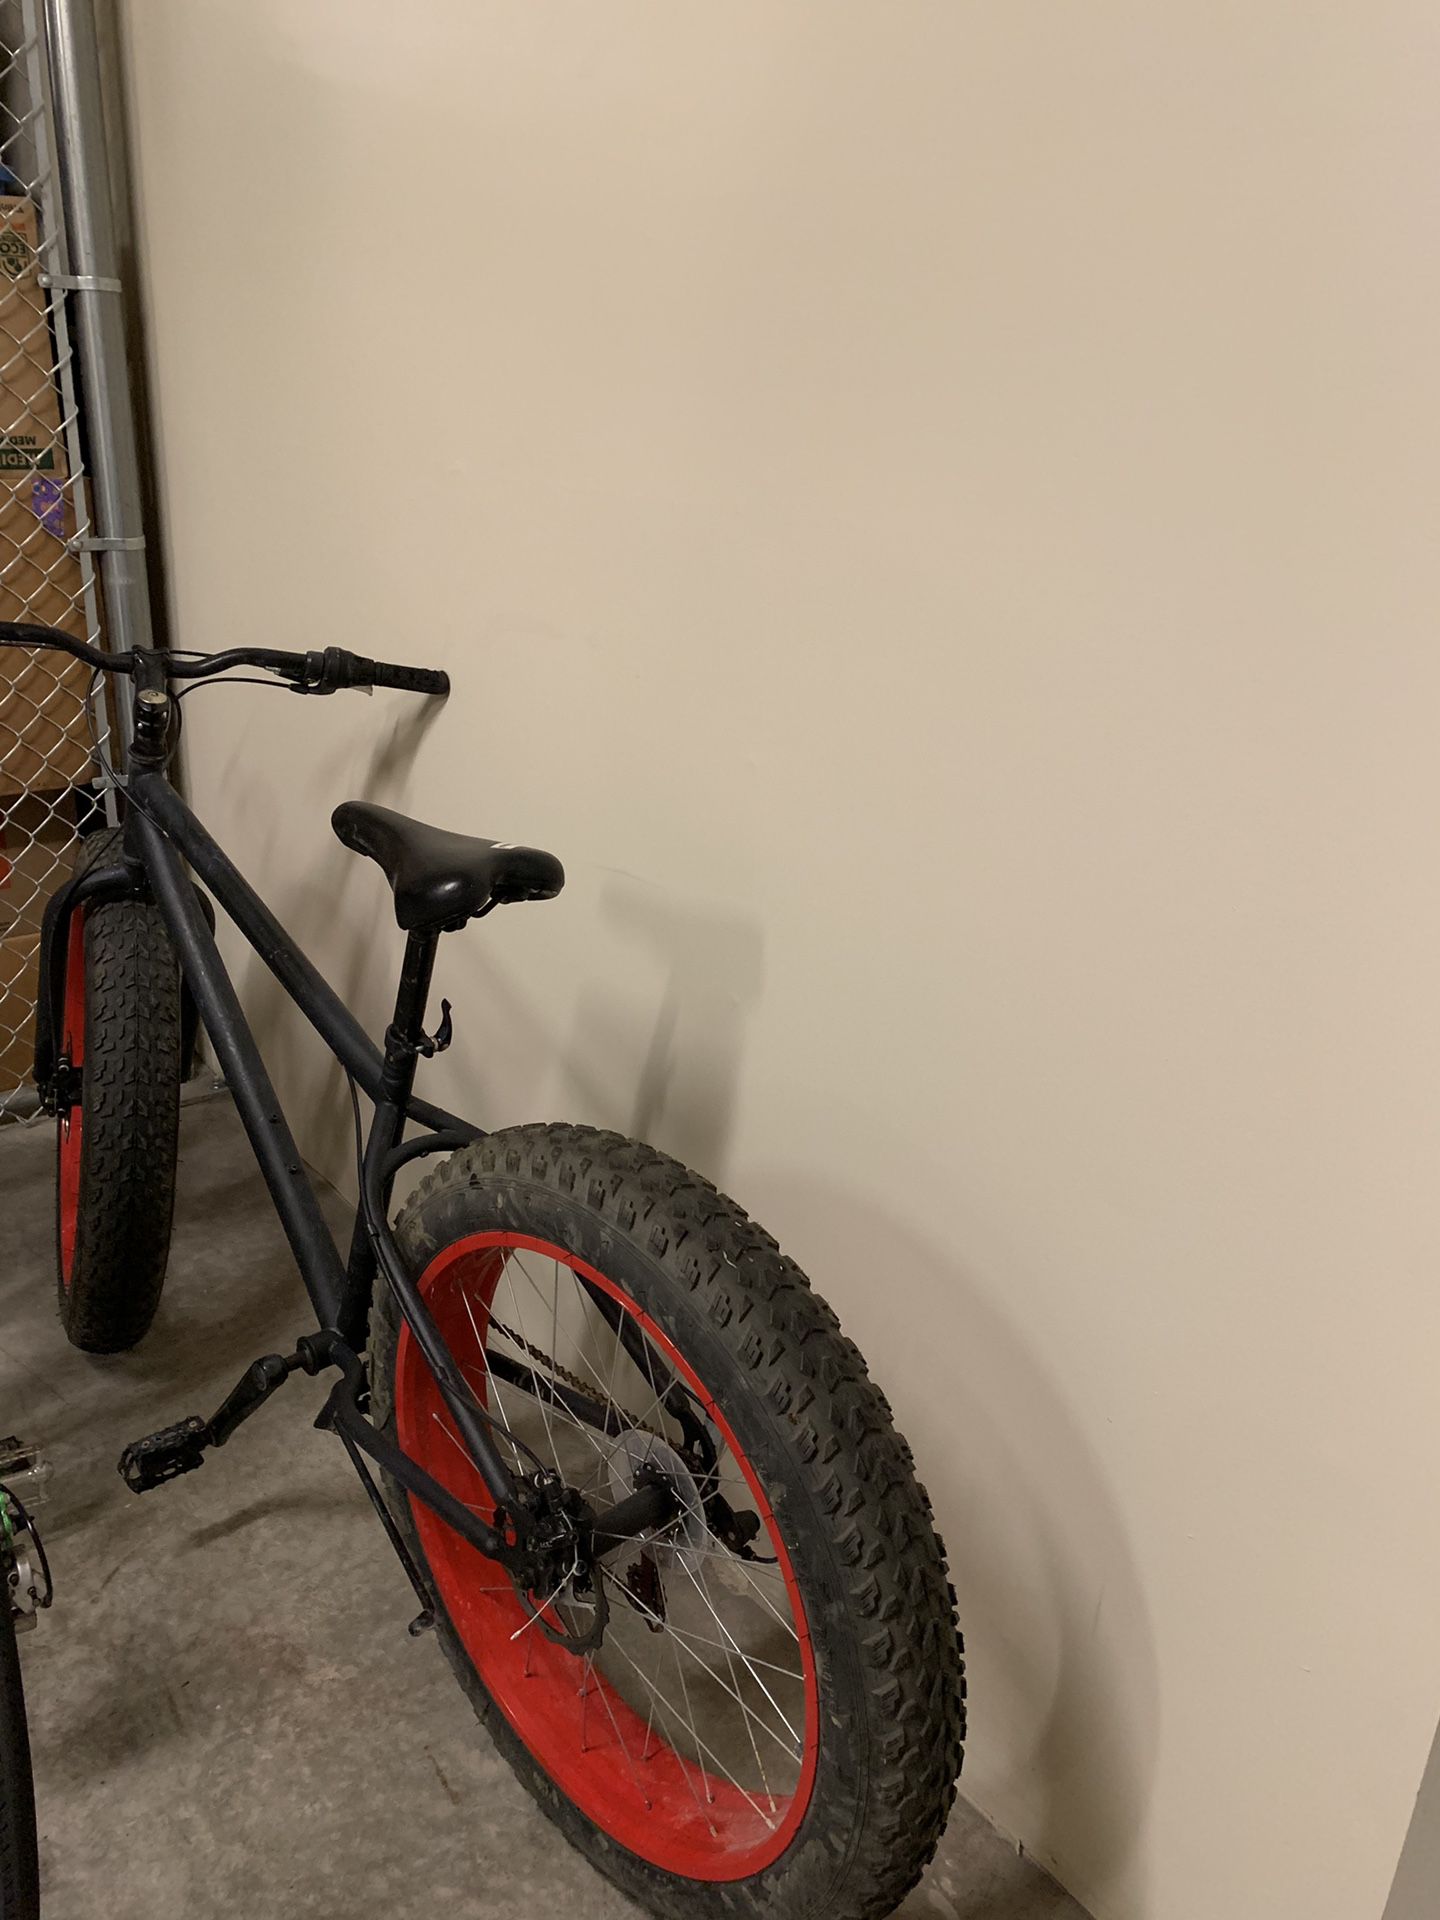 Mongoose Fat tire bike, like new.